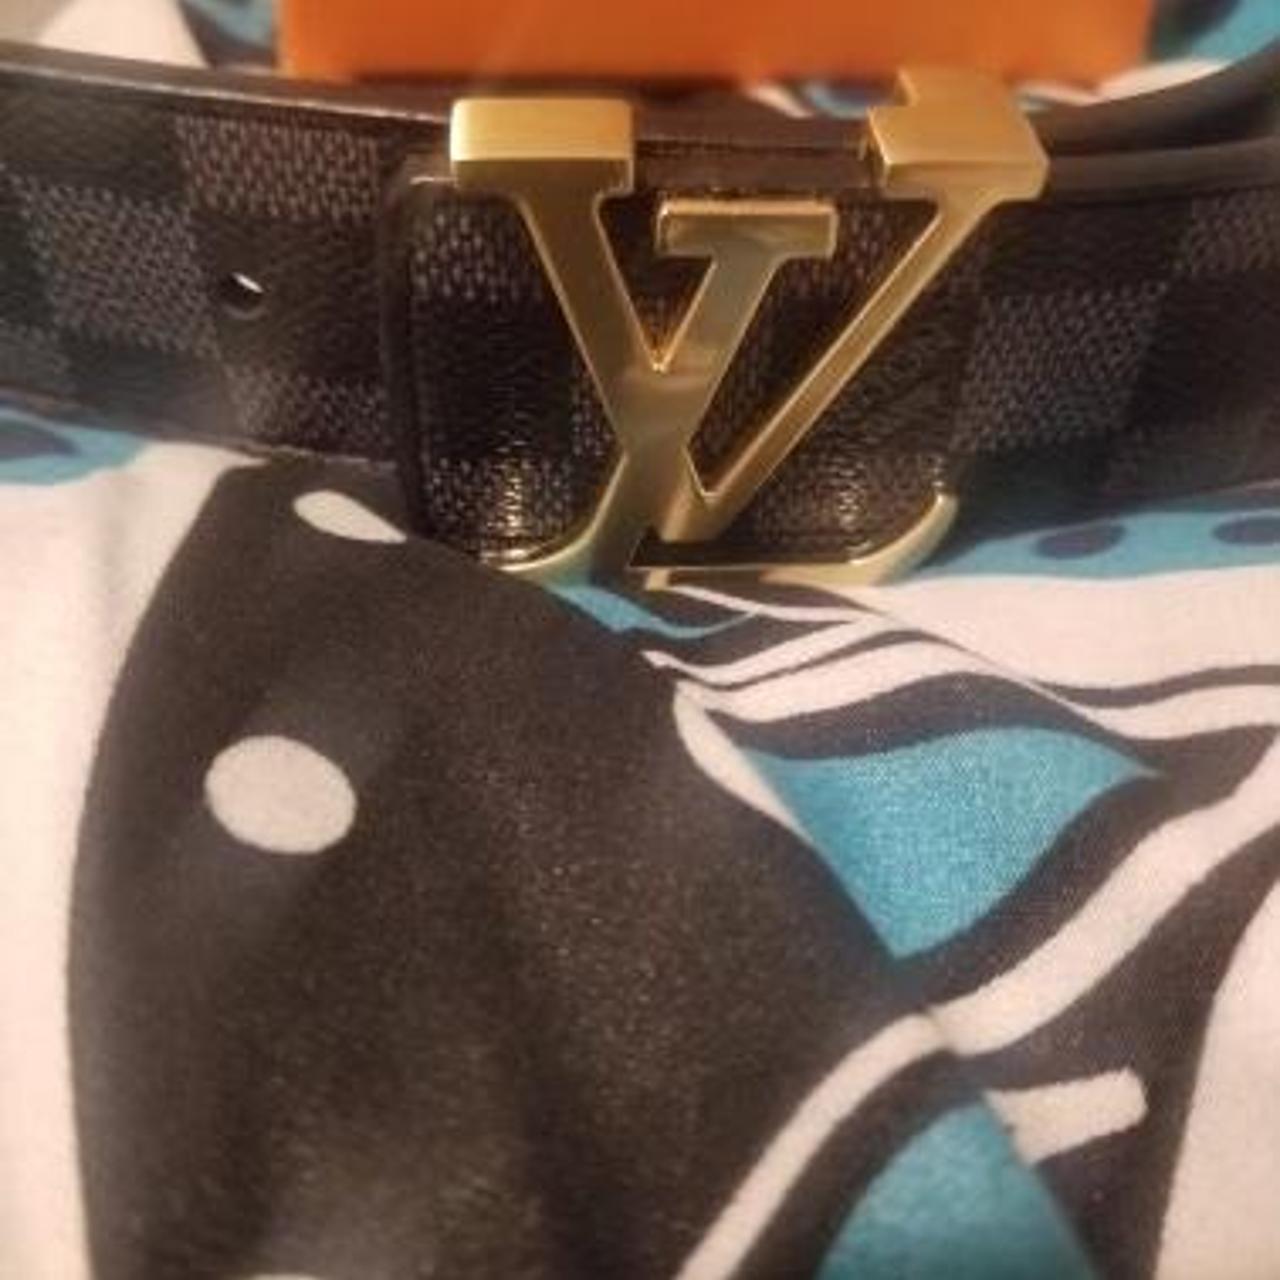 This an authentic Louis Vuitton Name Tag & Belt - Depop